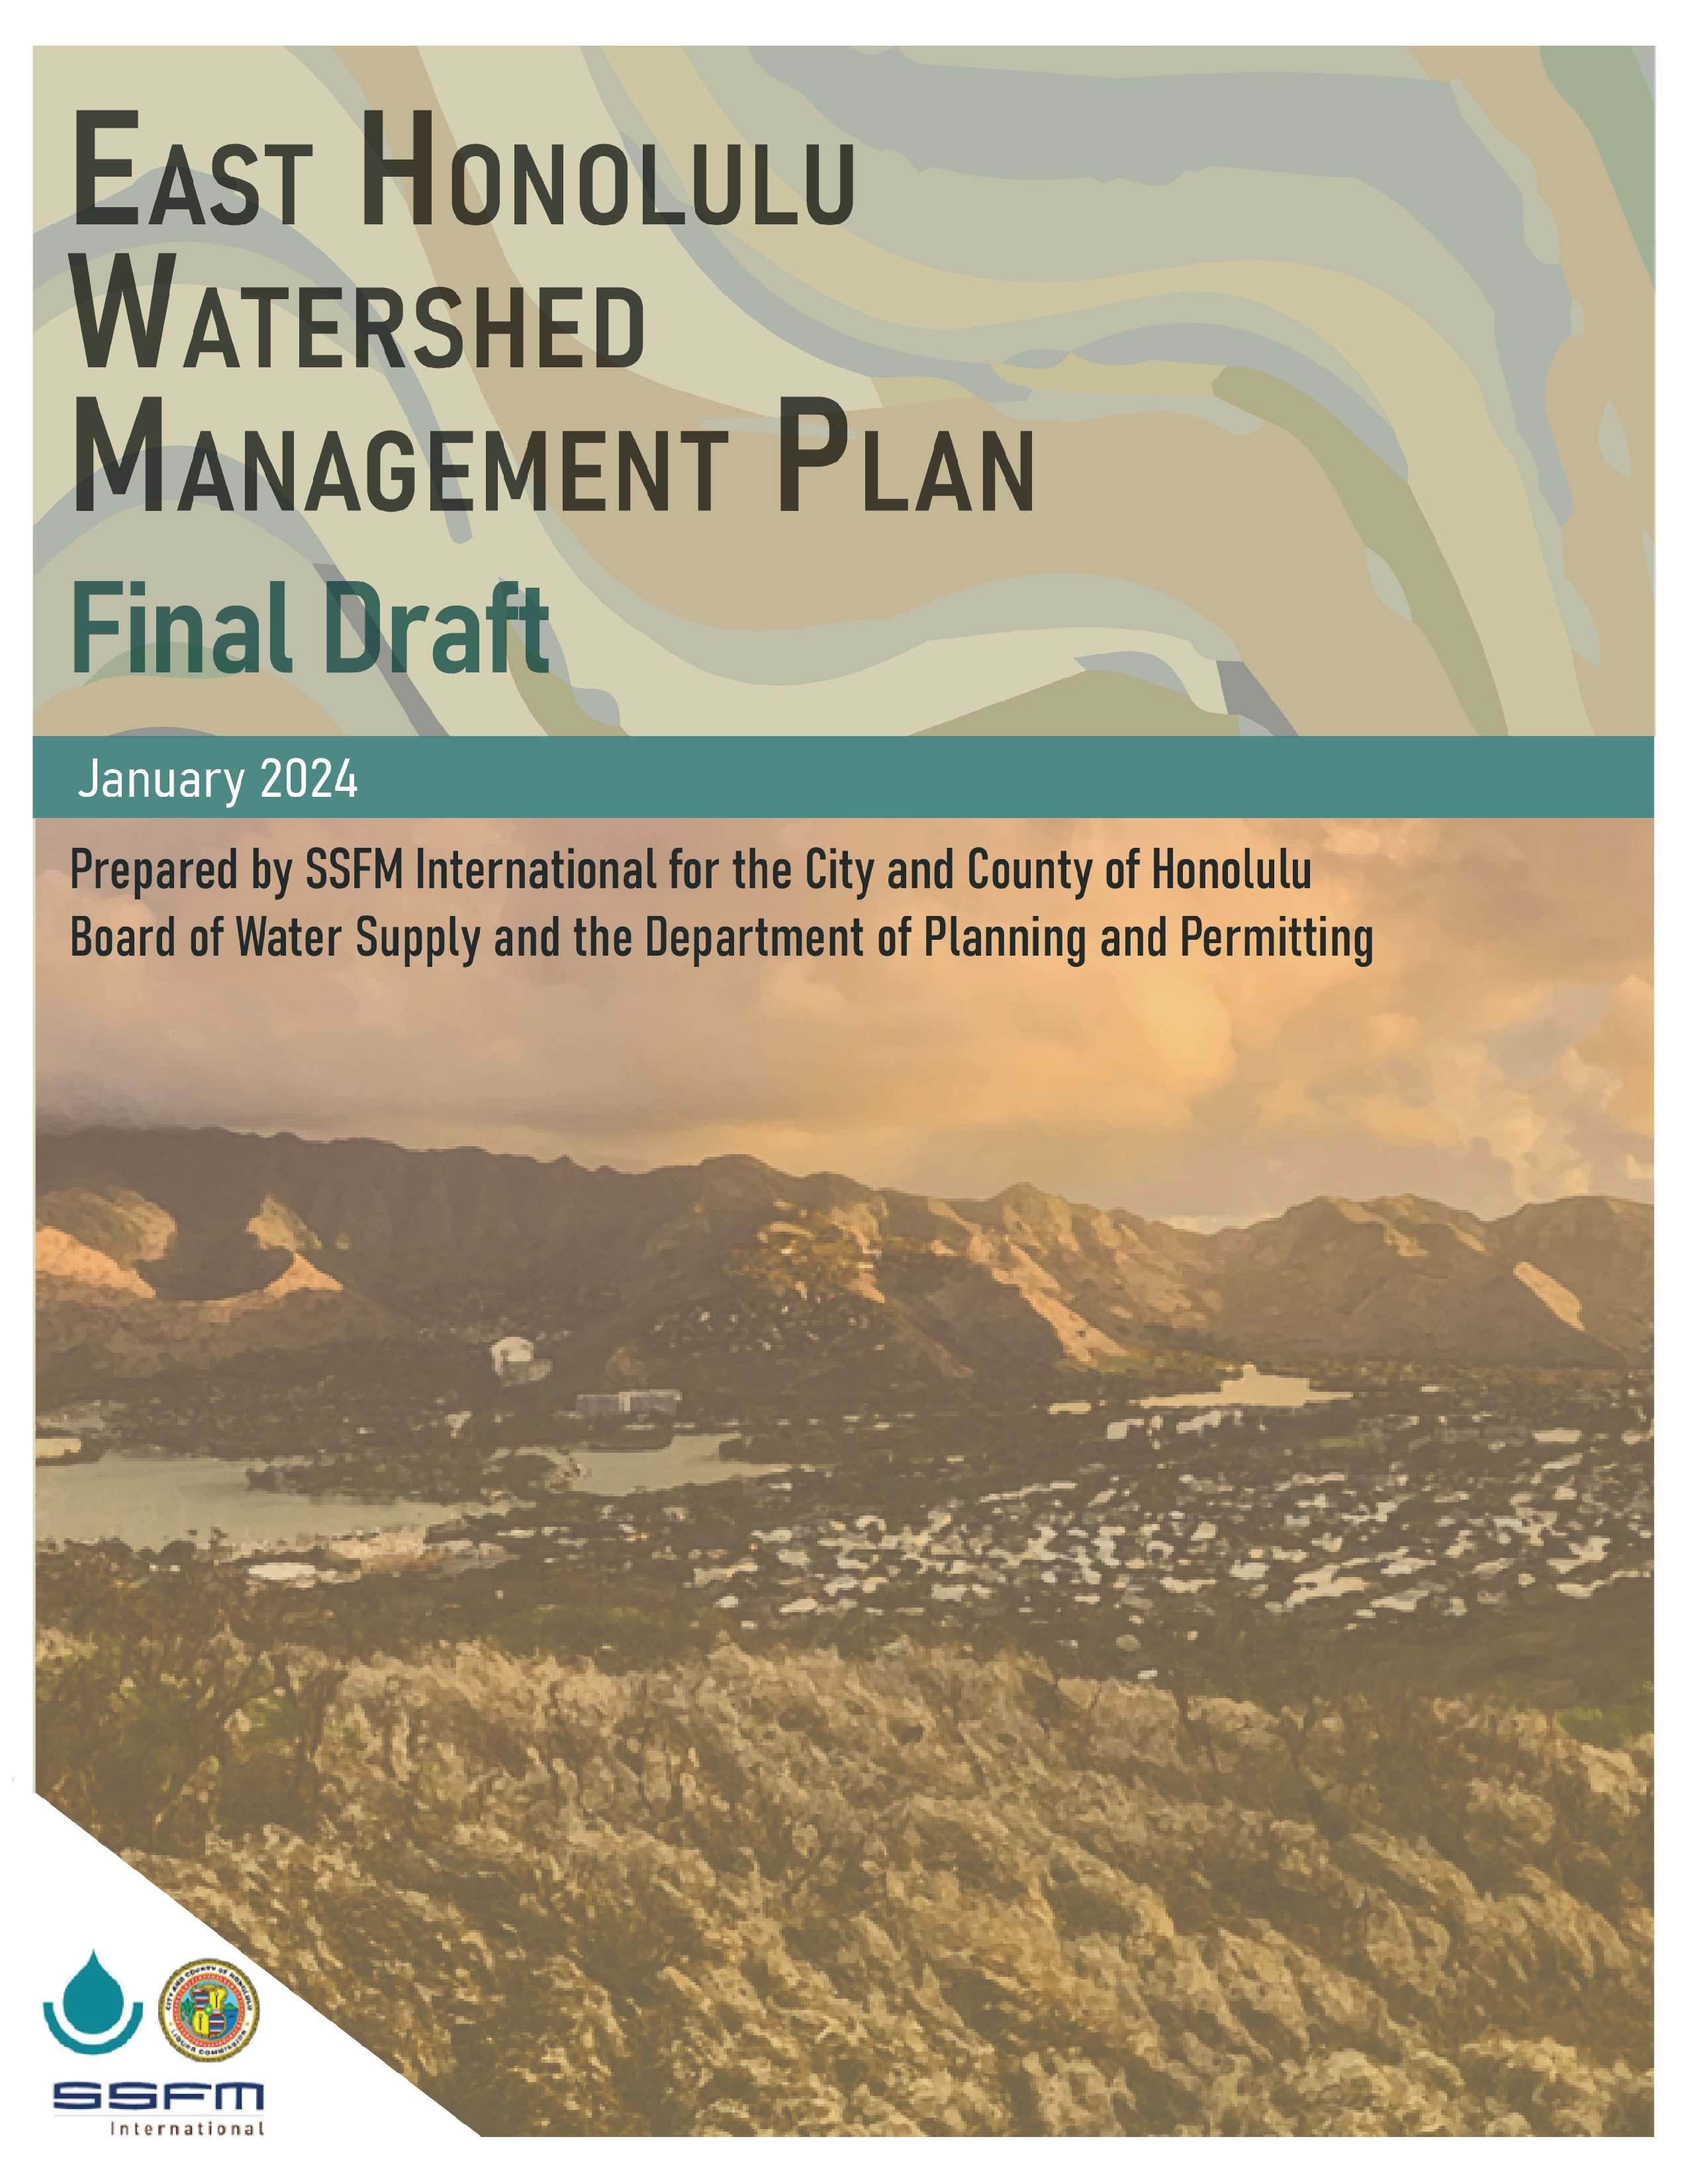 East Honolulu Watershed Management Plan Final Draft